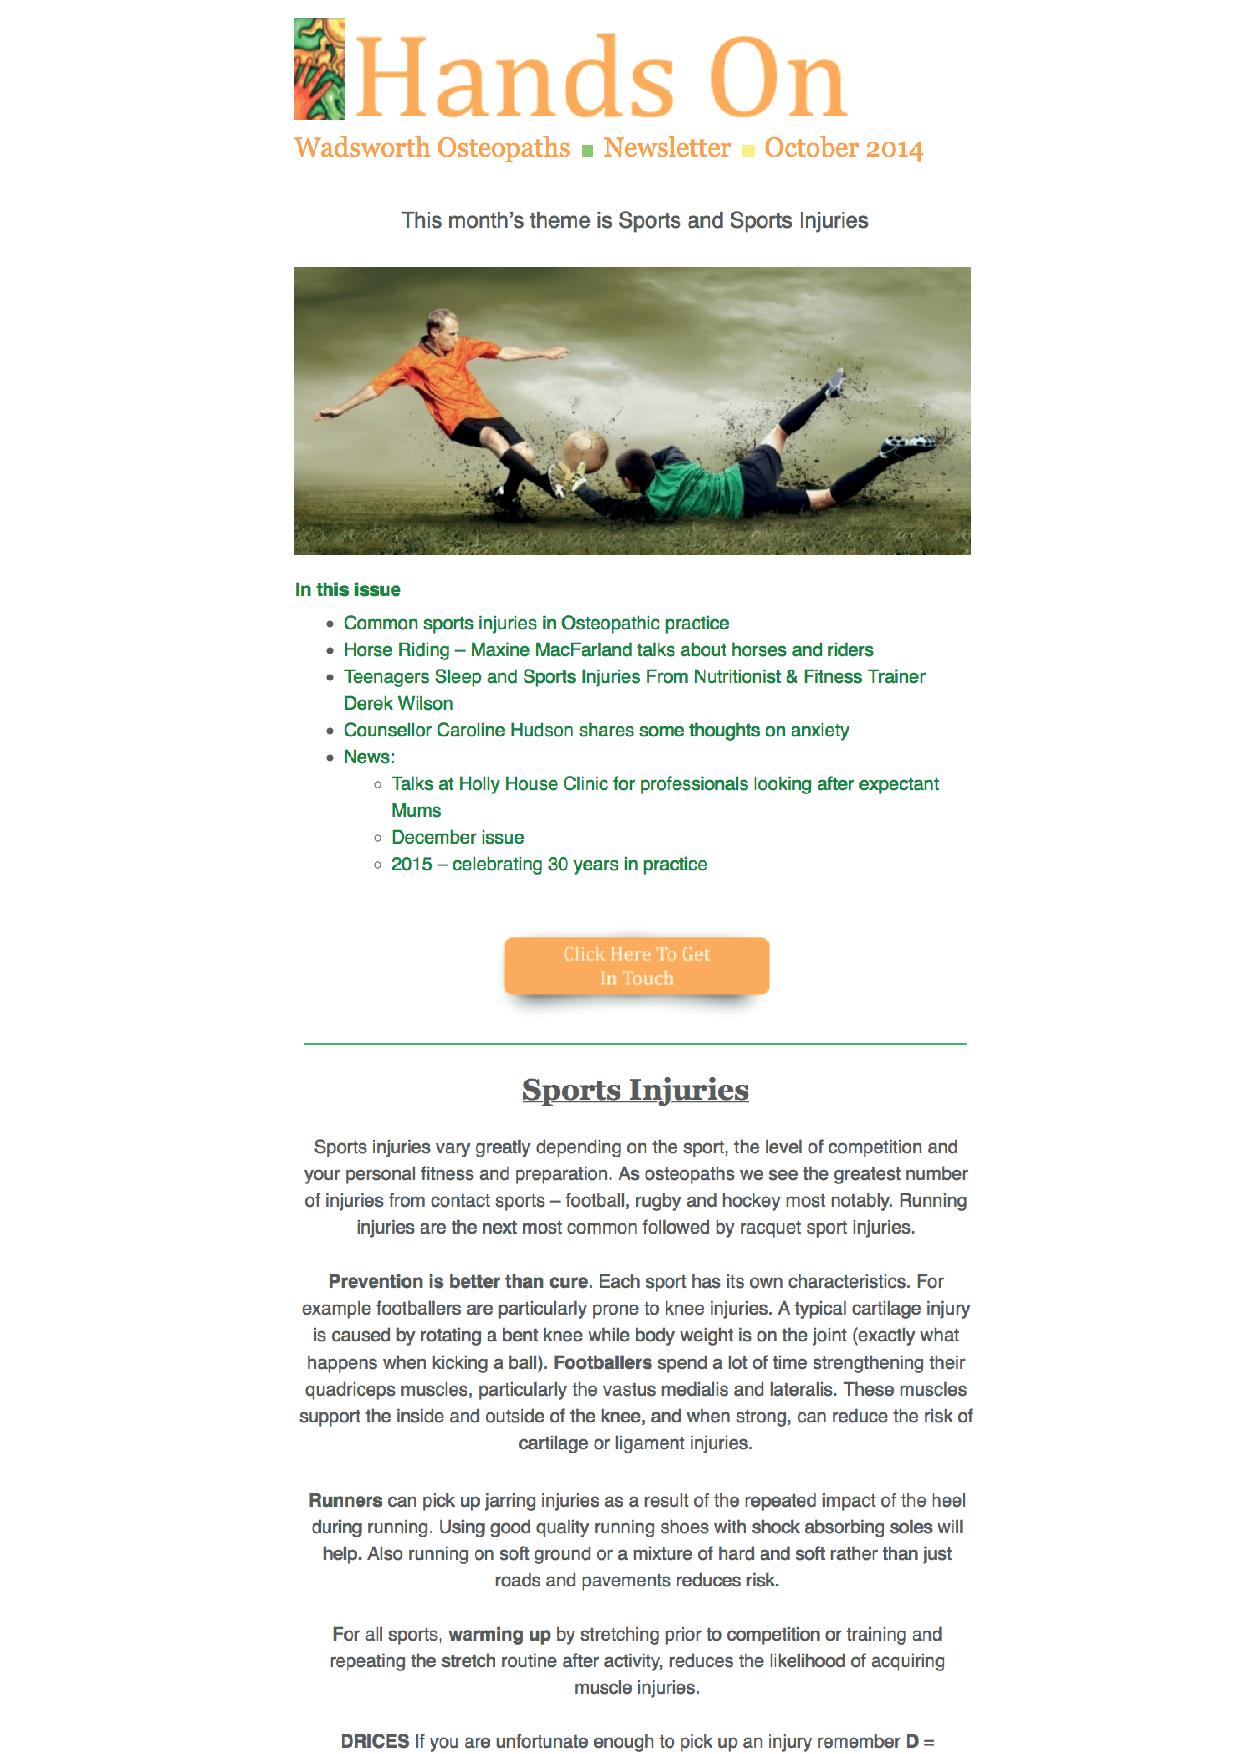 Wadsworth Osteopaths - sports injuries newsletter